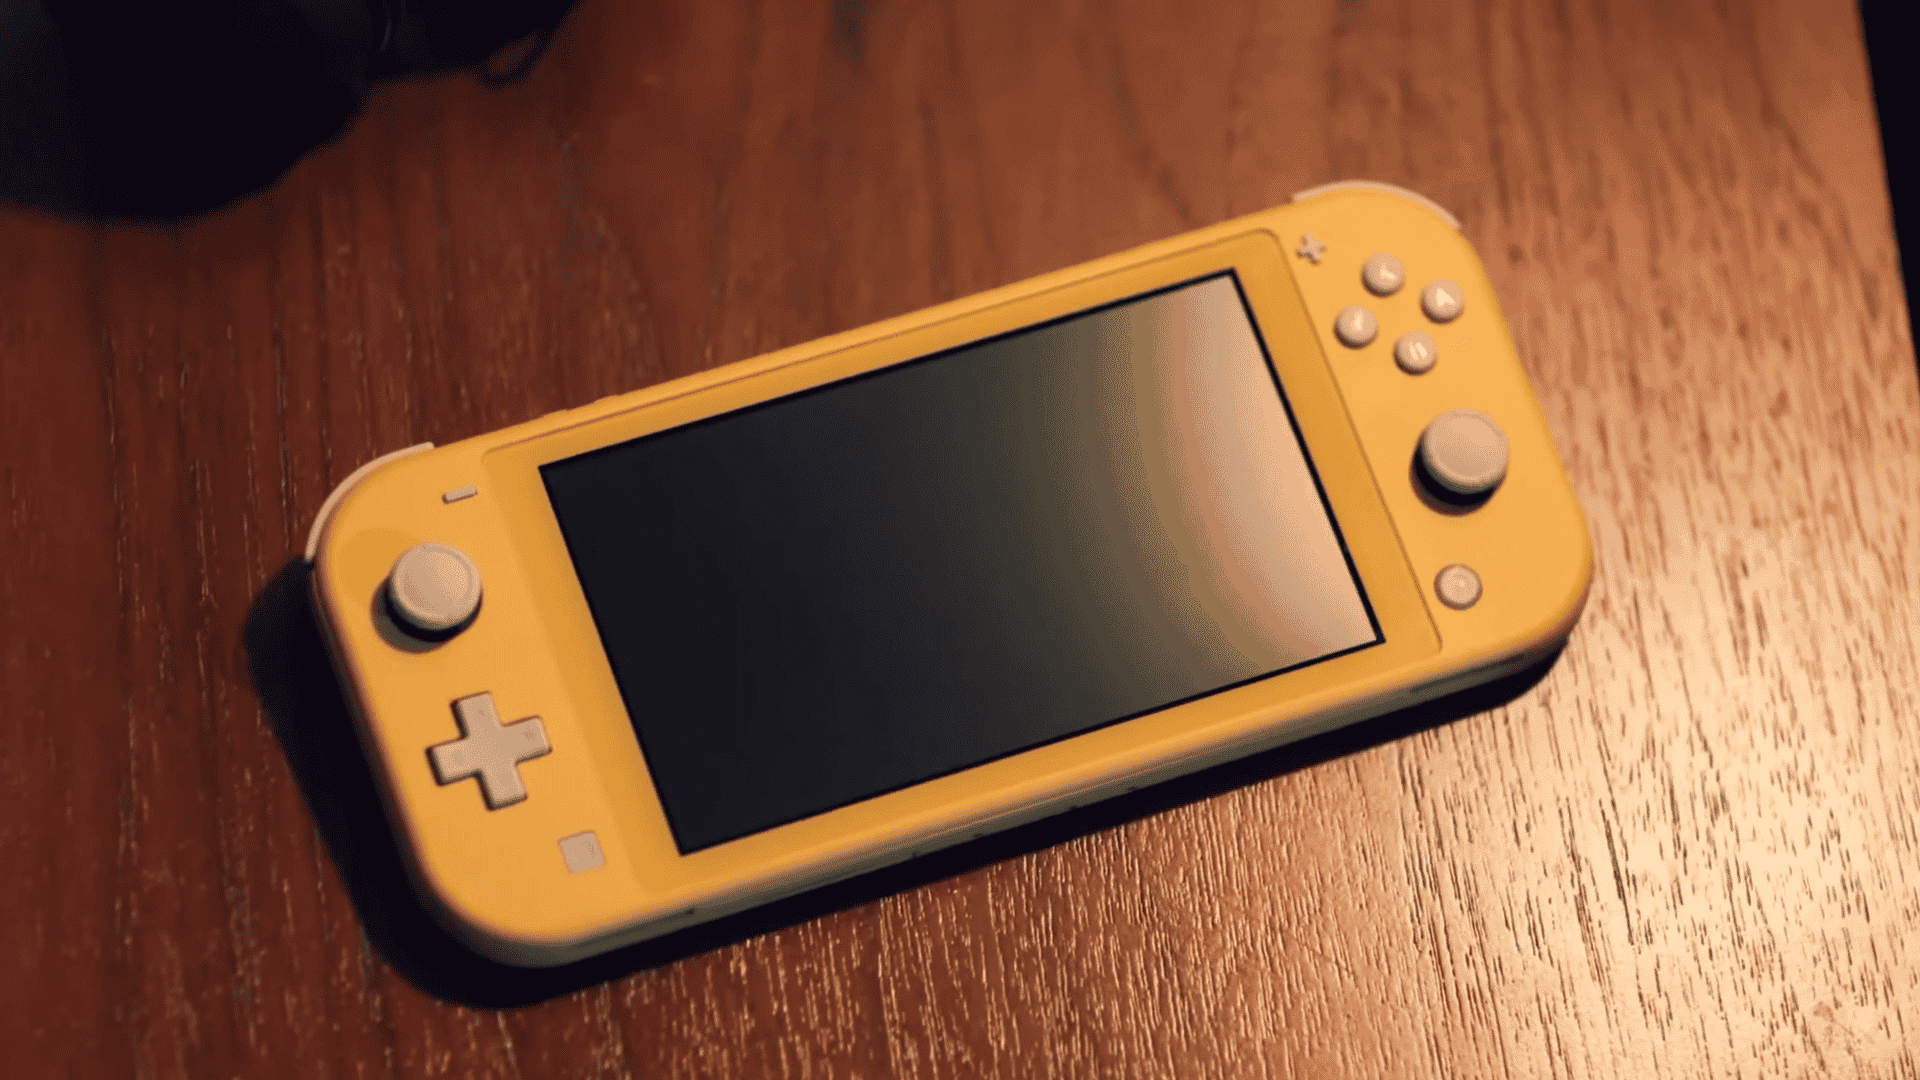 Yellow Nintendo Switch Lite